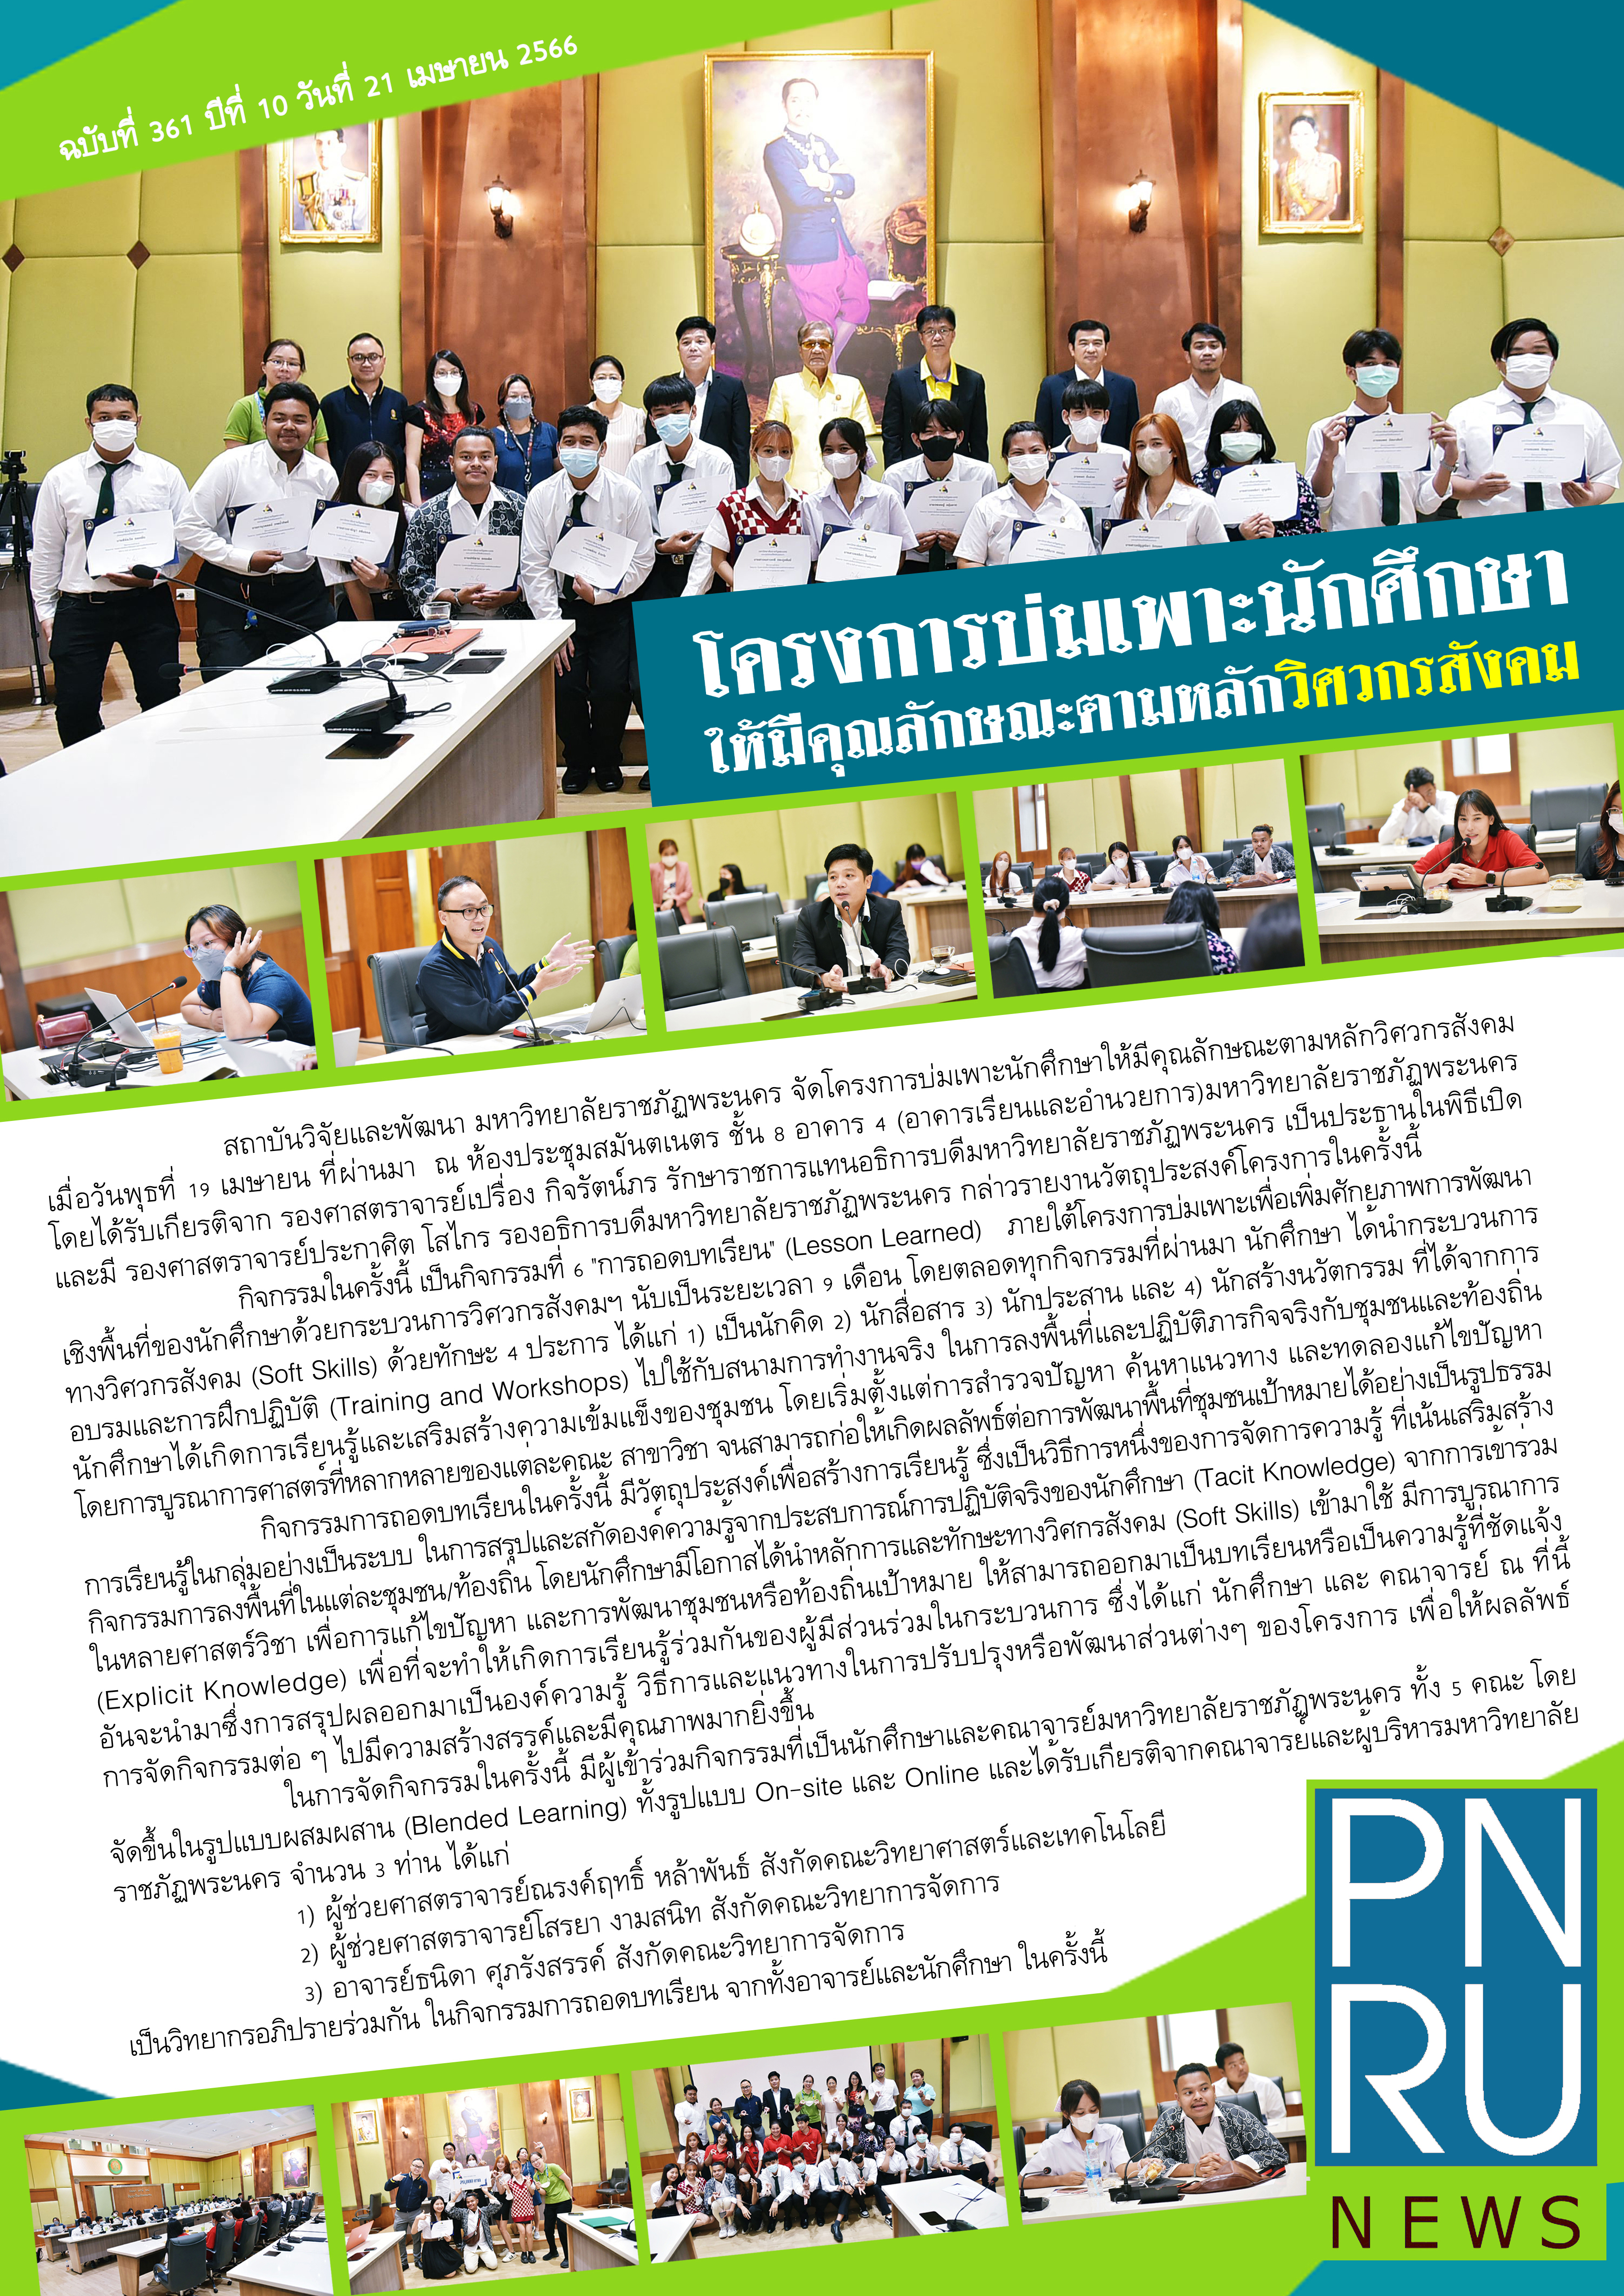 PNRU NEWS (361) : โครงการบ่มเพาะนักศึกษาให้มีคุณลักษณะตามหลักวิศวกรสังคม กิจกรรม "ถอดบทเรียน" (Lesson Learning)